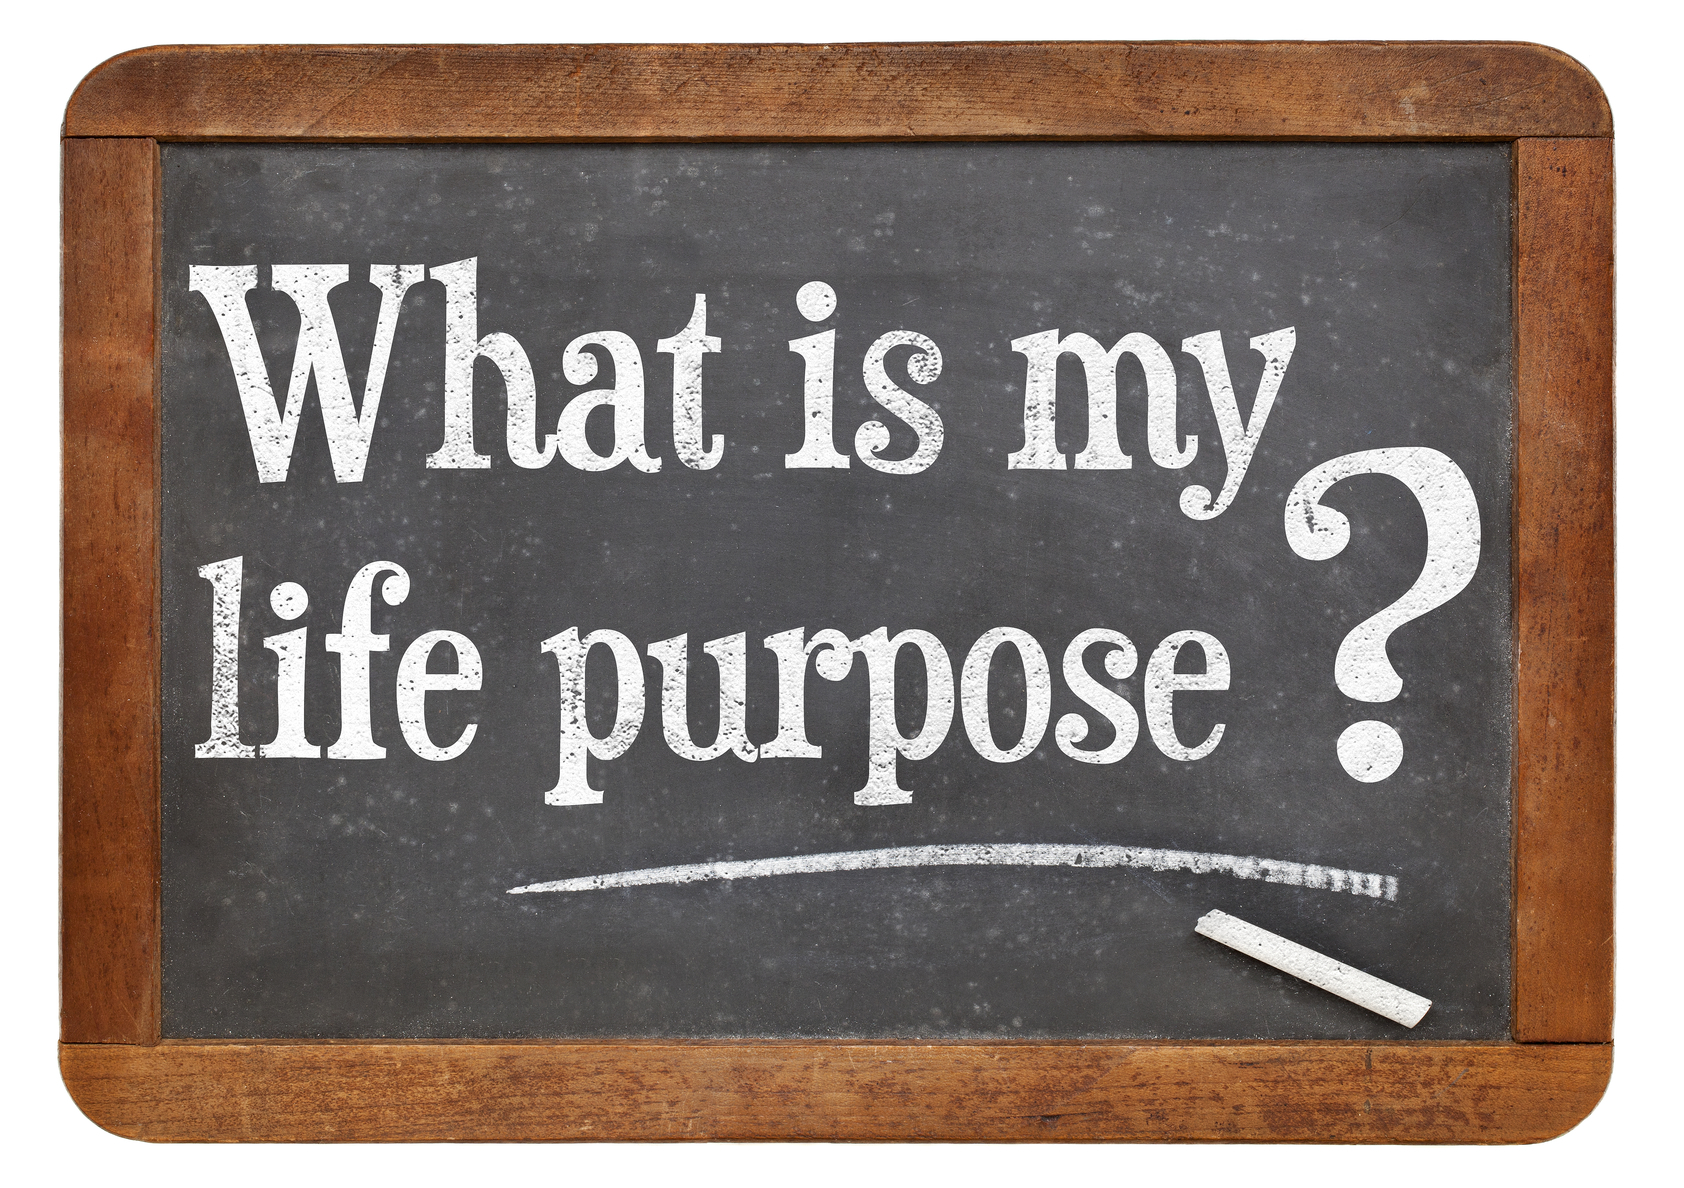 Question of purpose. Life purpose. My purpose in Life. On purpose. Картинка к слову what.